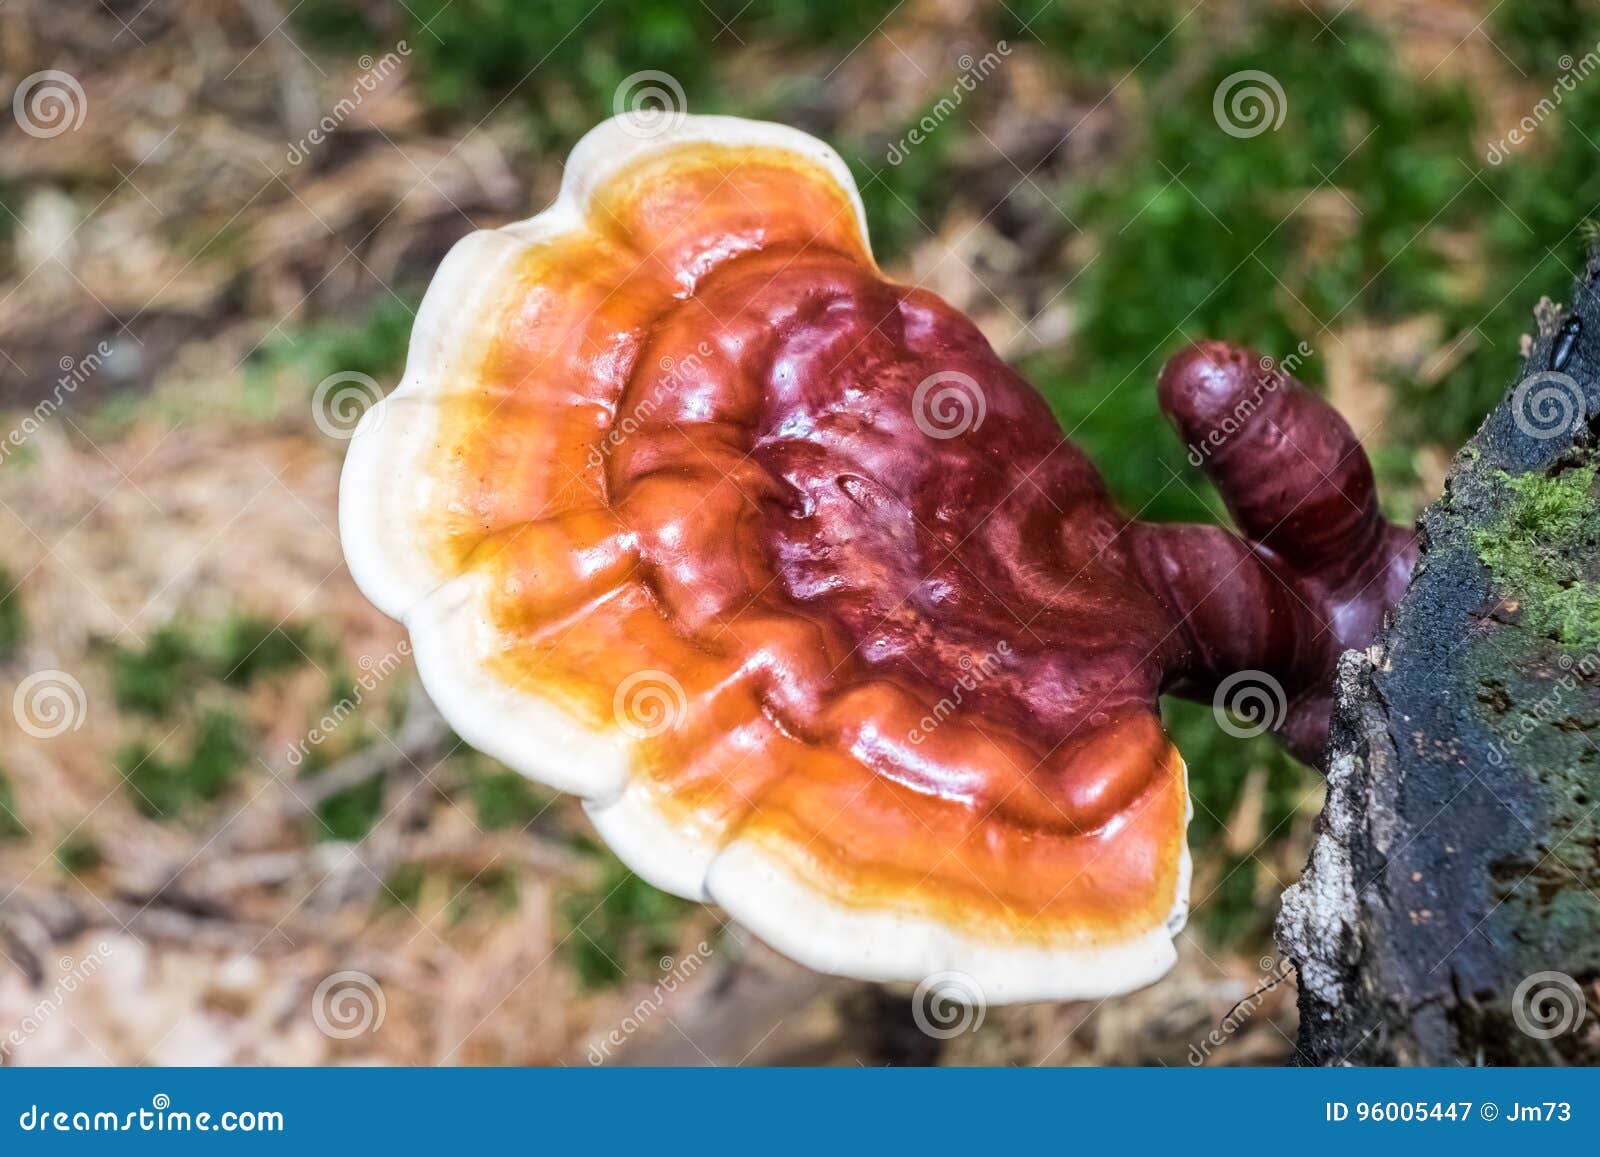 detail shot of reishi medicinal mushroom